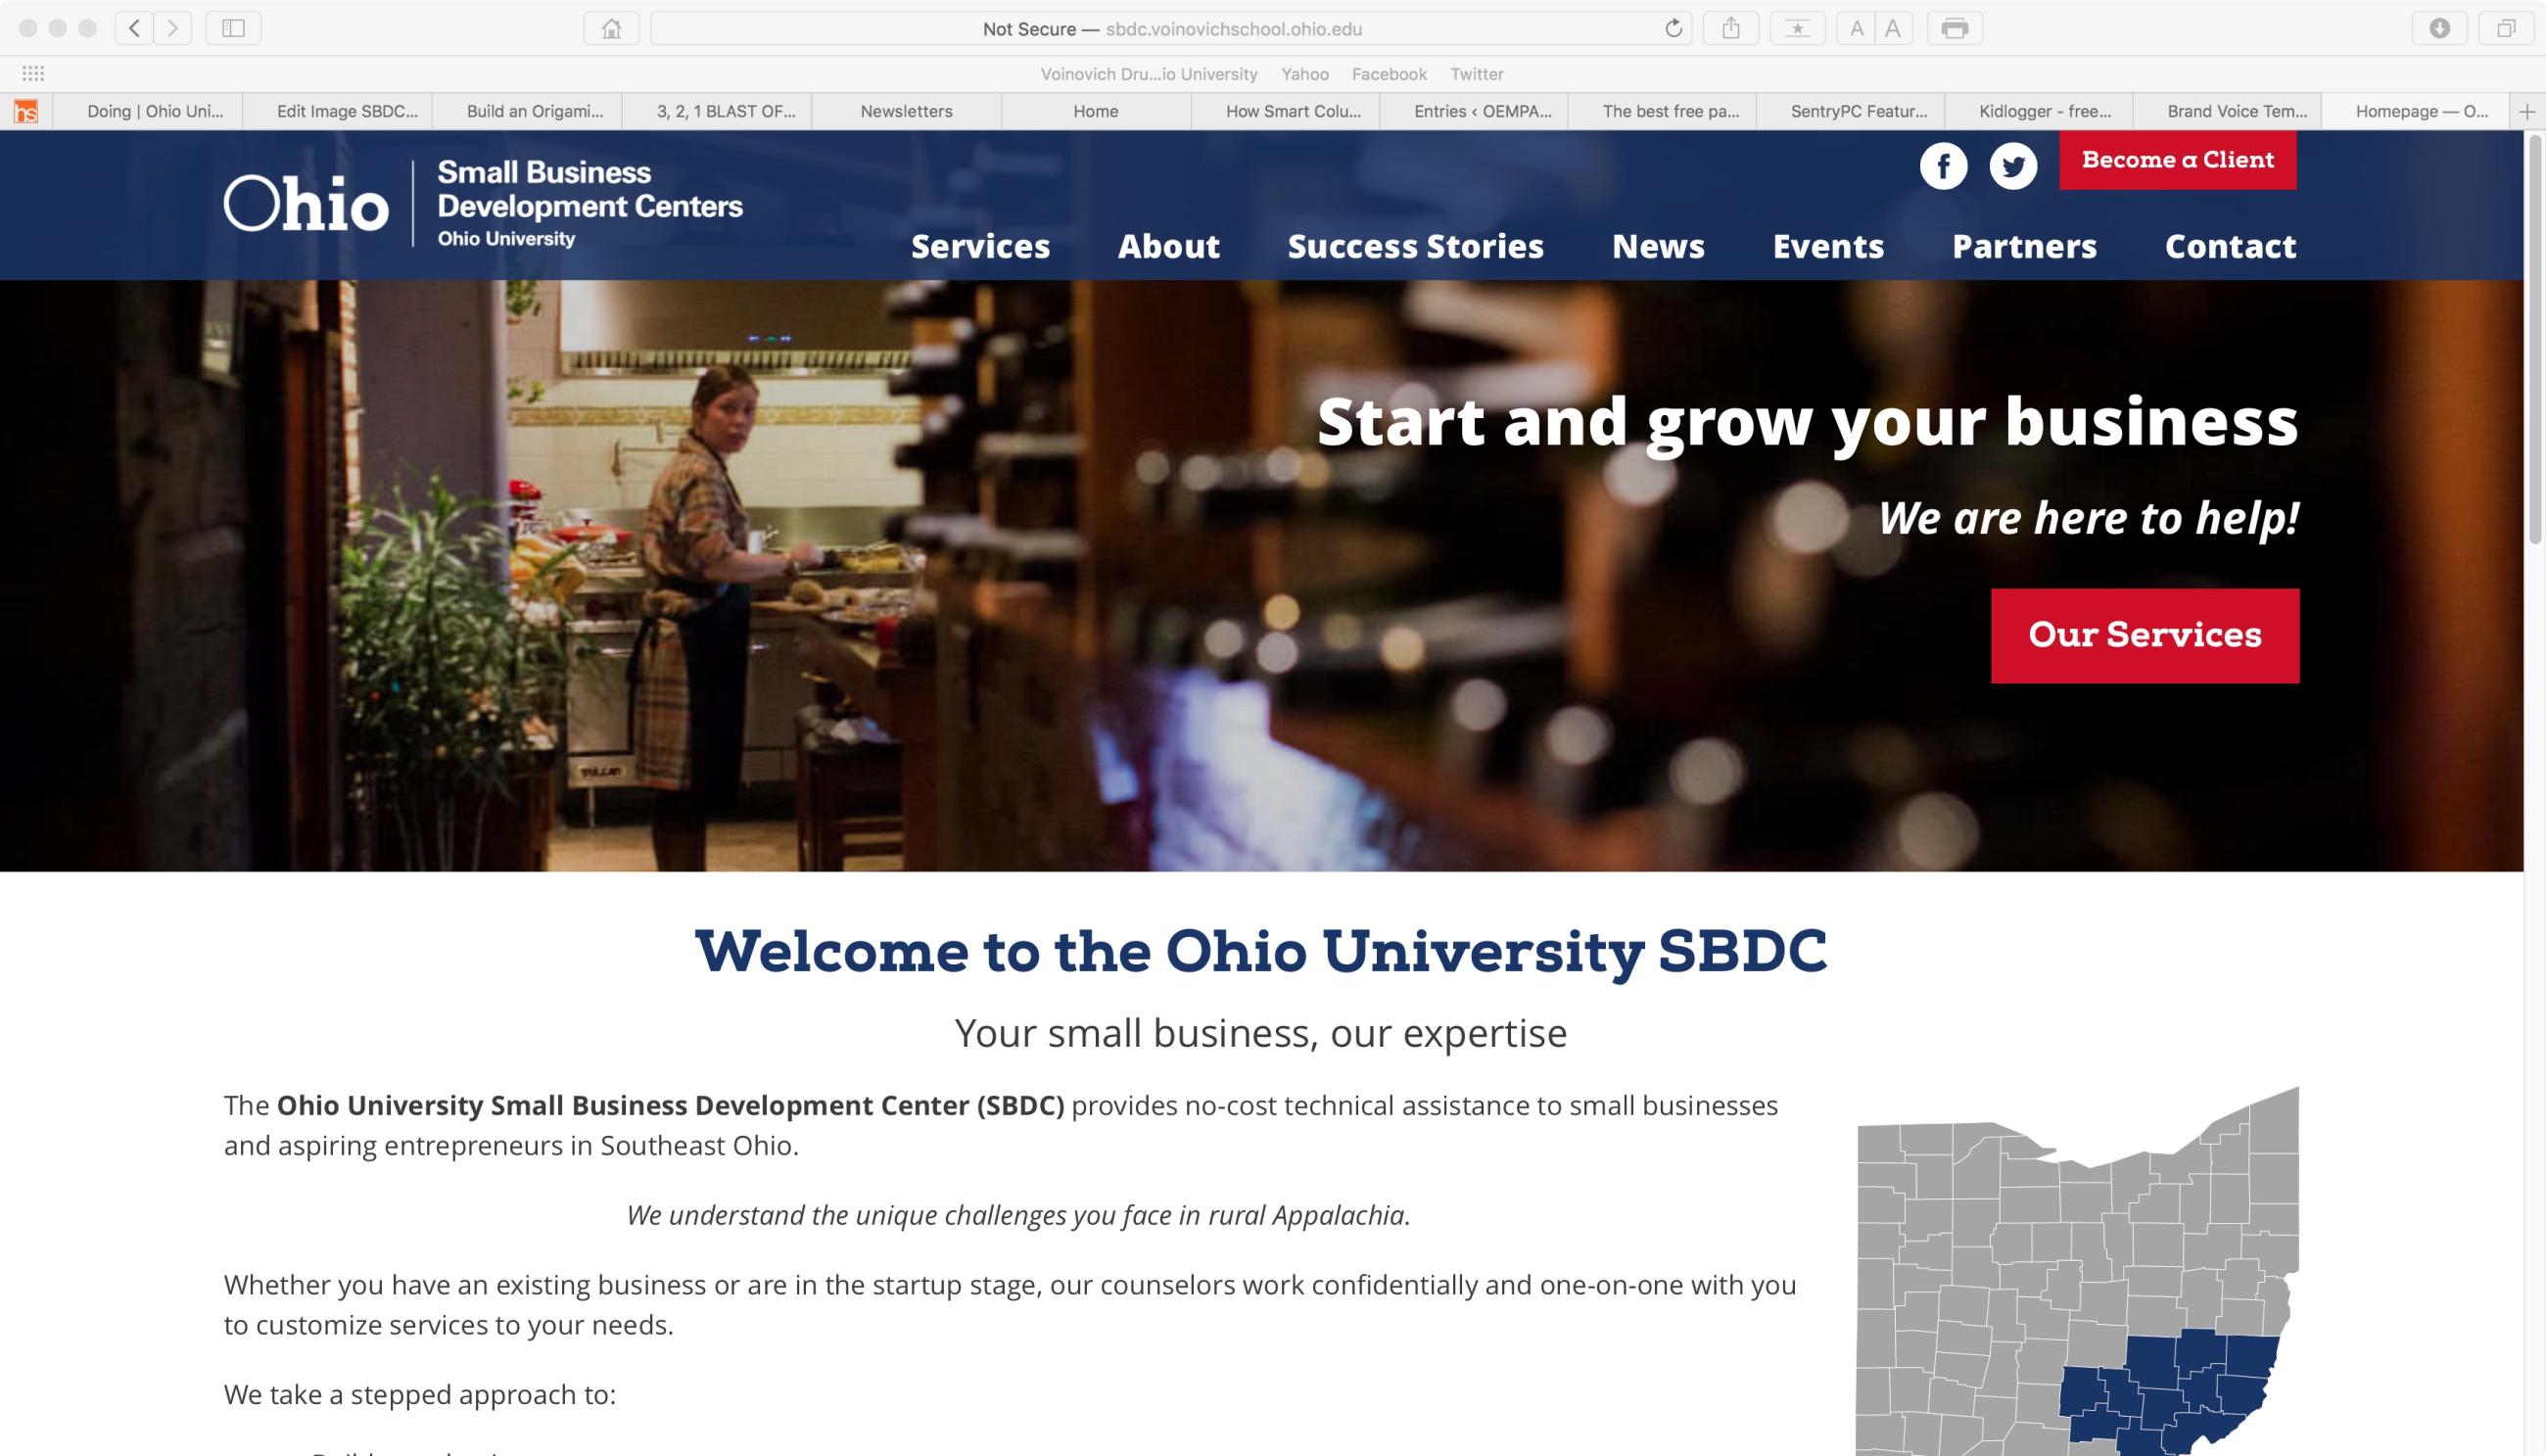 Ohio University SBDC website screenshot